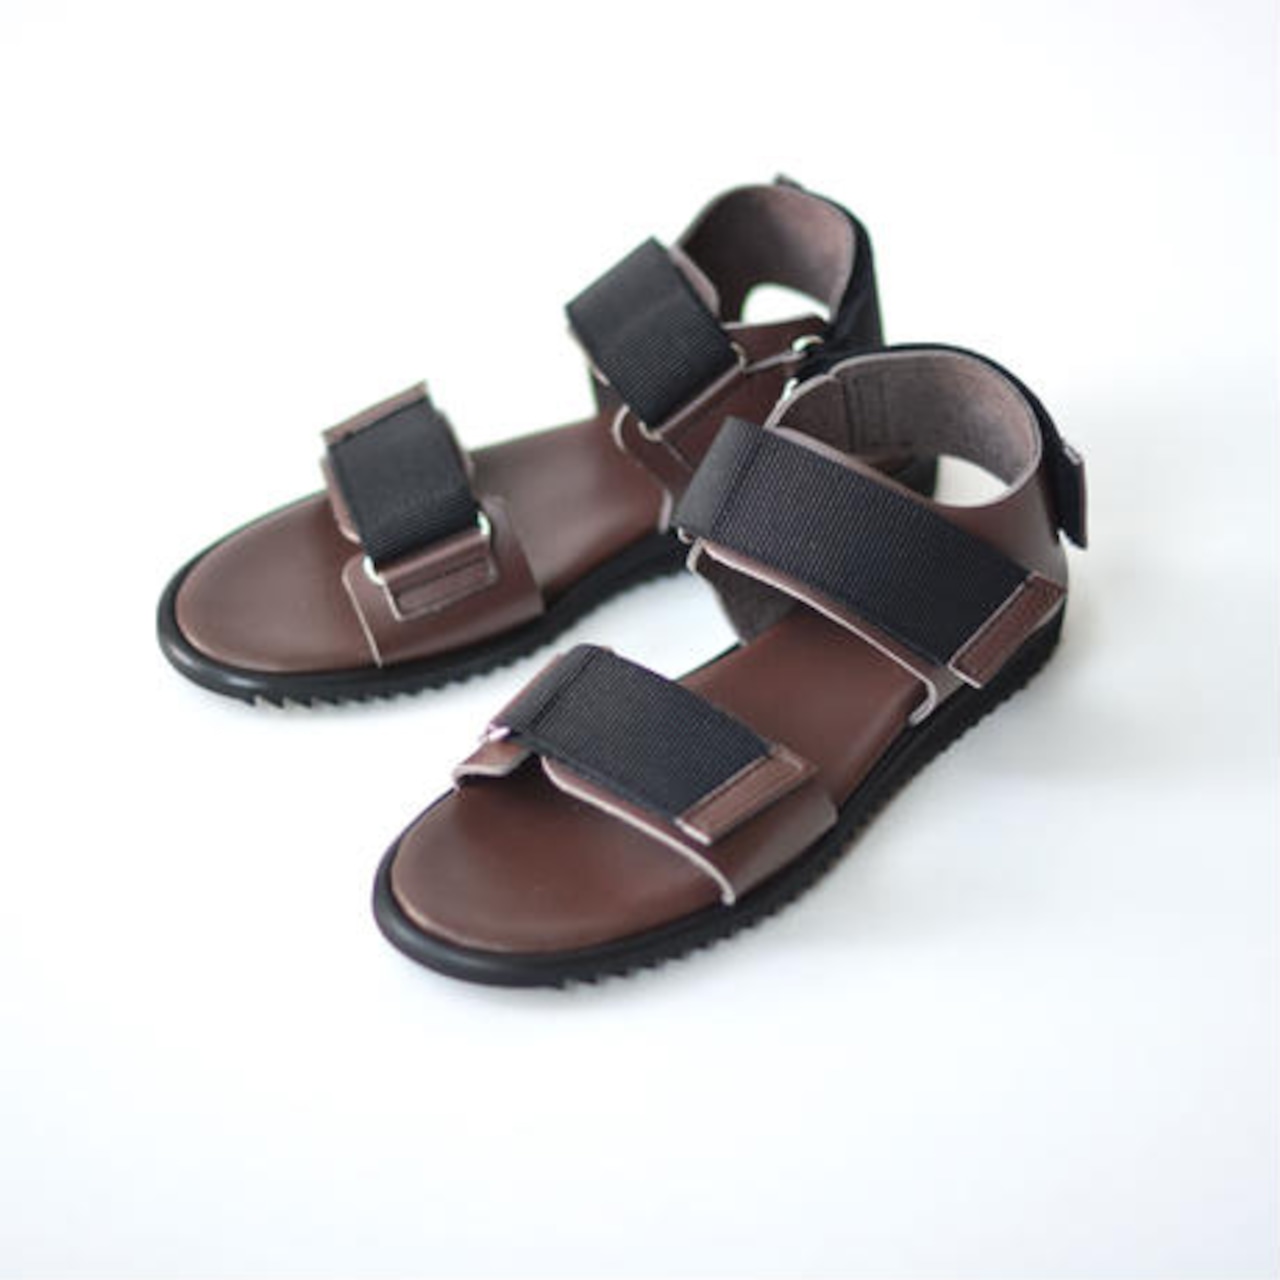 NINOS / WP Sandal / サンダル / 22〜24.5cm / Brown